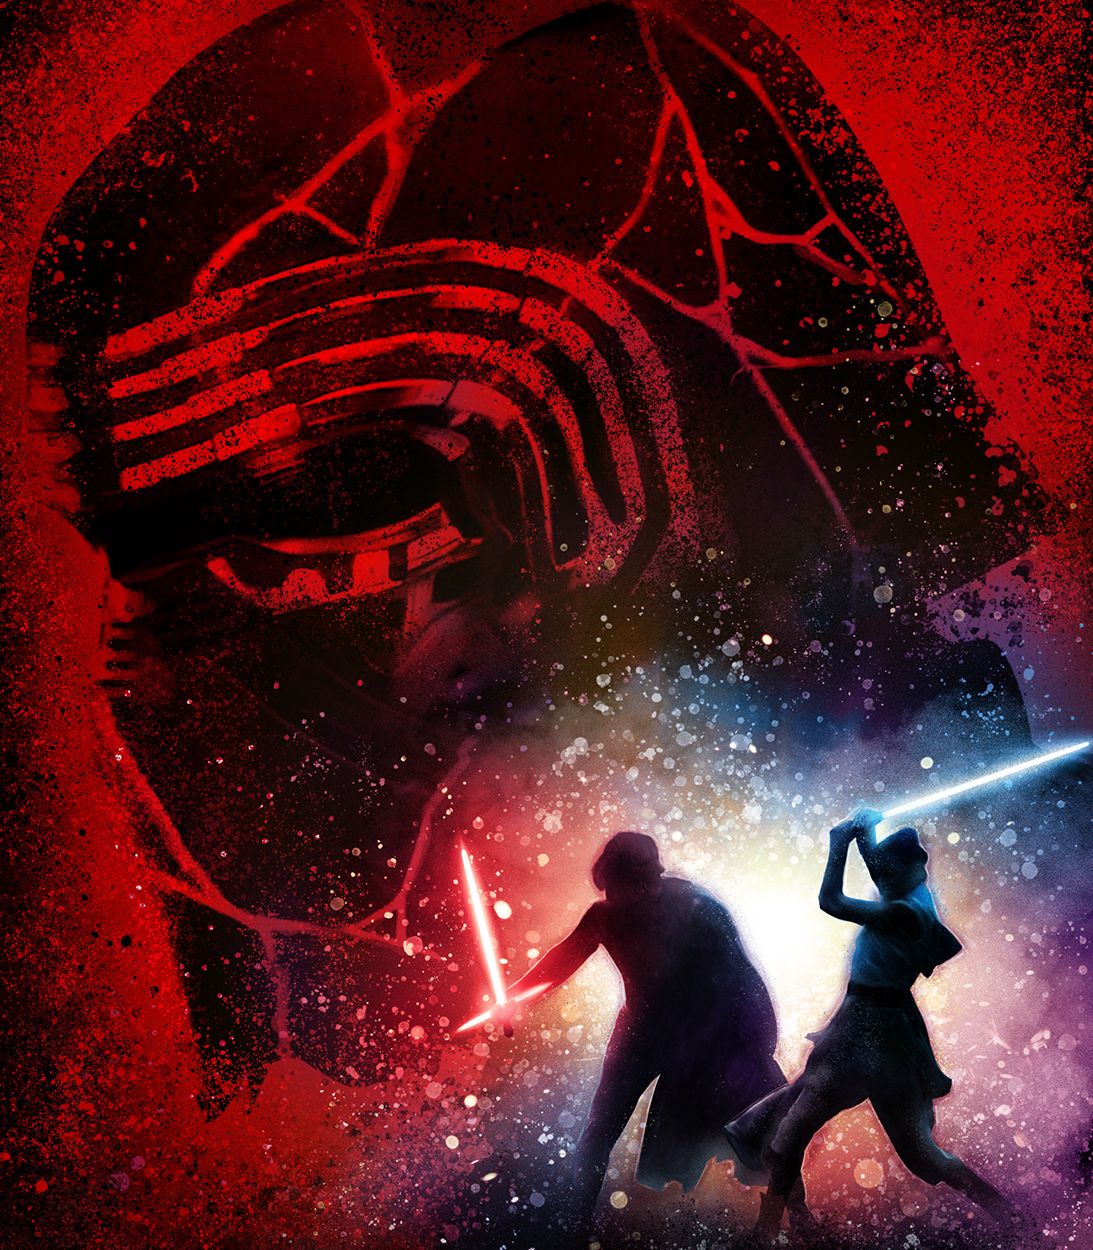 Star Wars: The Rise of Skywalker poster featuring Kylo Ren's new cracked helmet.